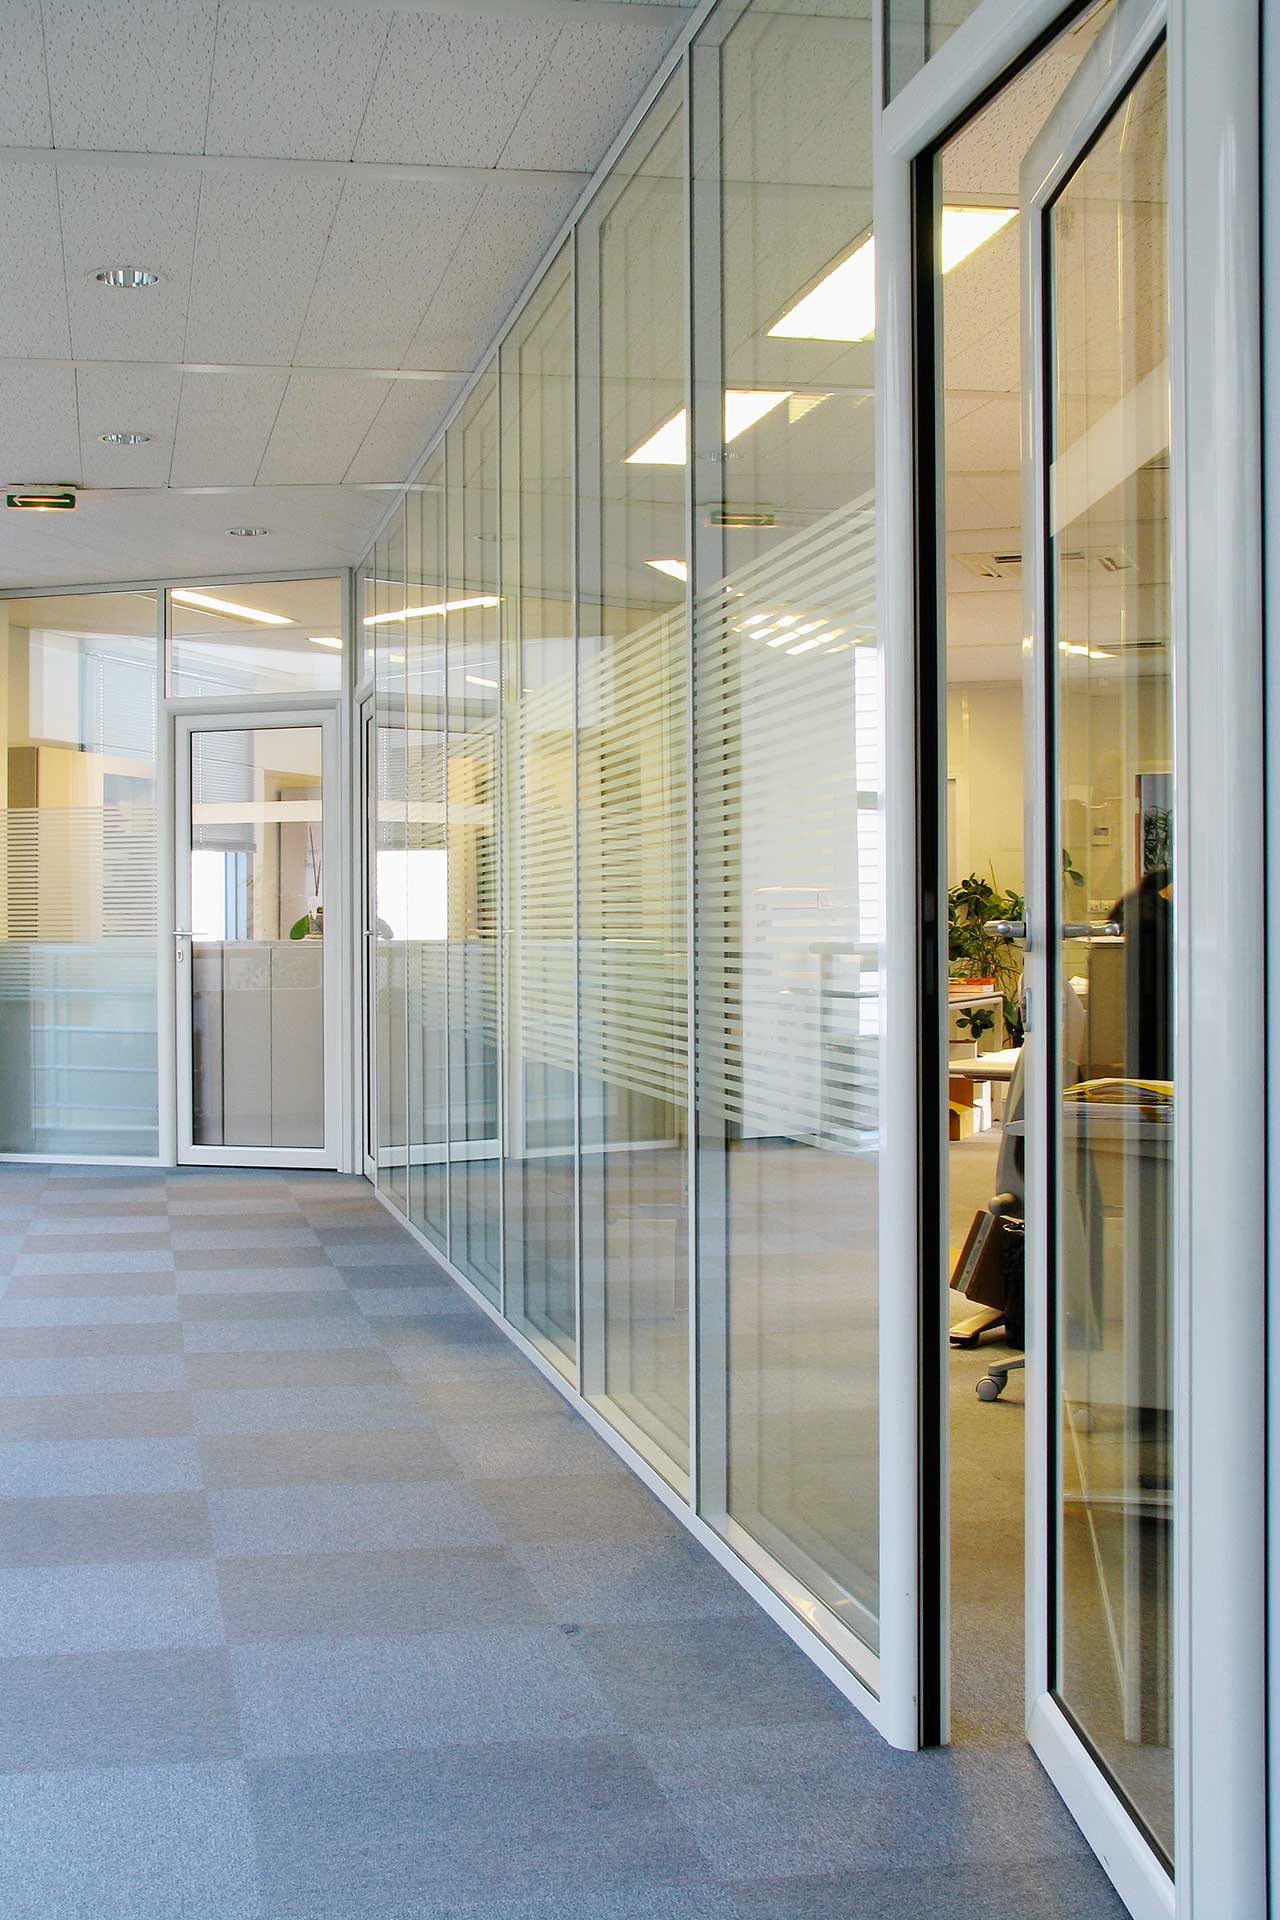 Cloisons amovibles blocs portes cadre aluminium ouvrant simple vantail